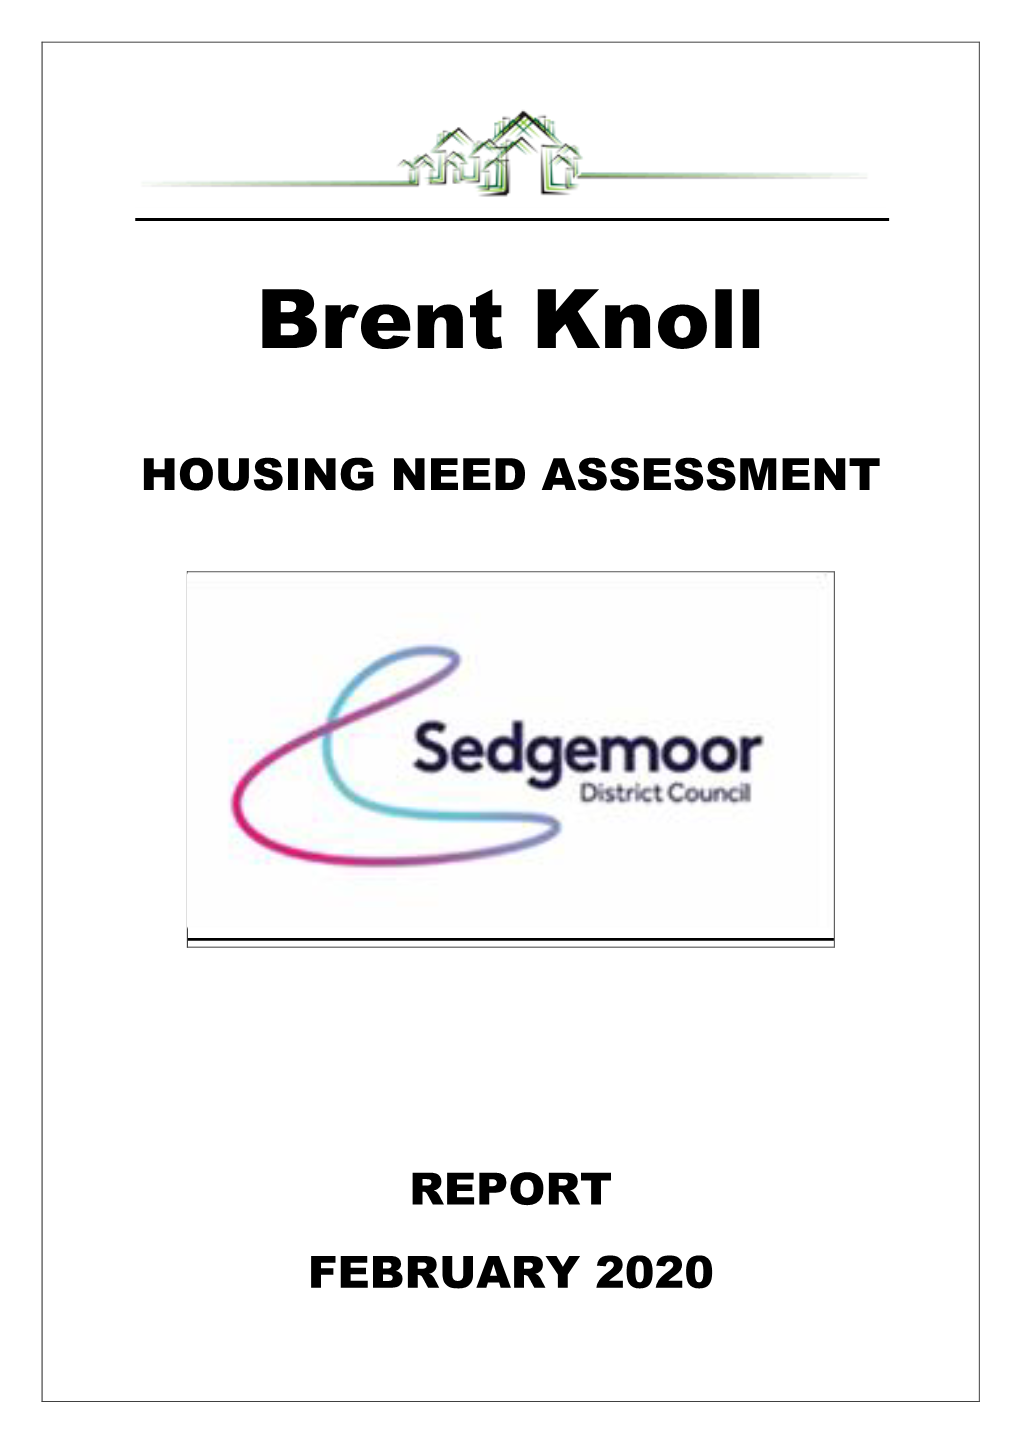 Brent Knoll Housing Need Assessment 2020